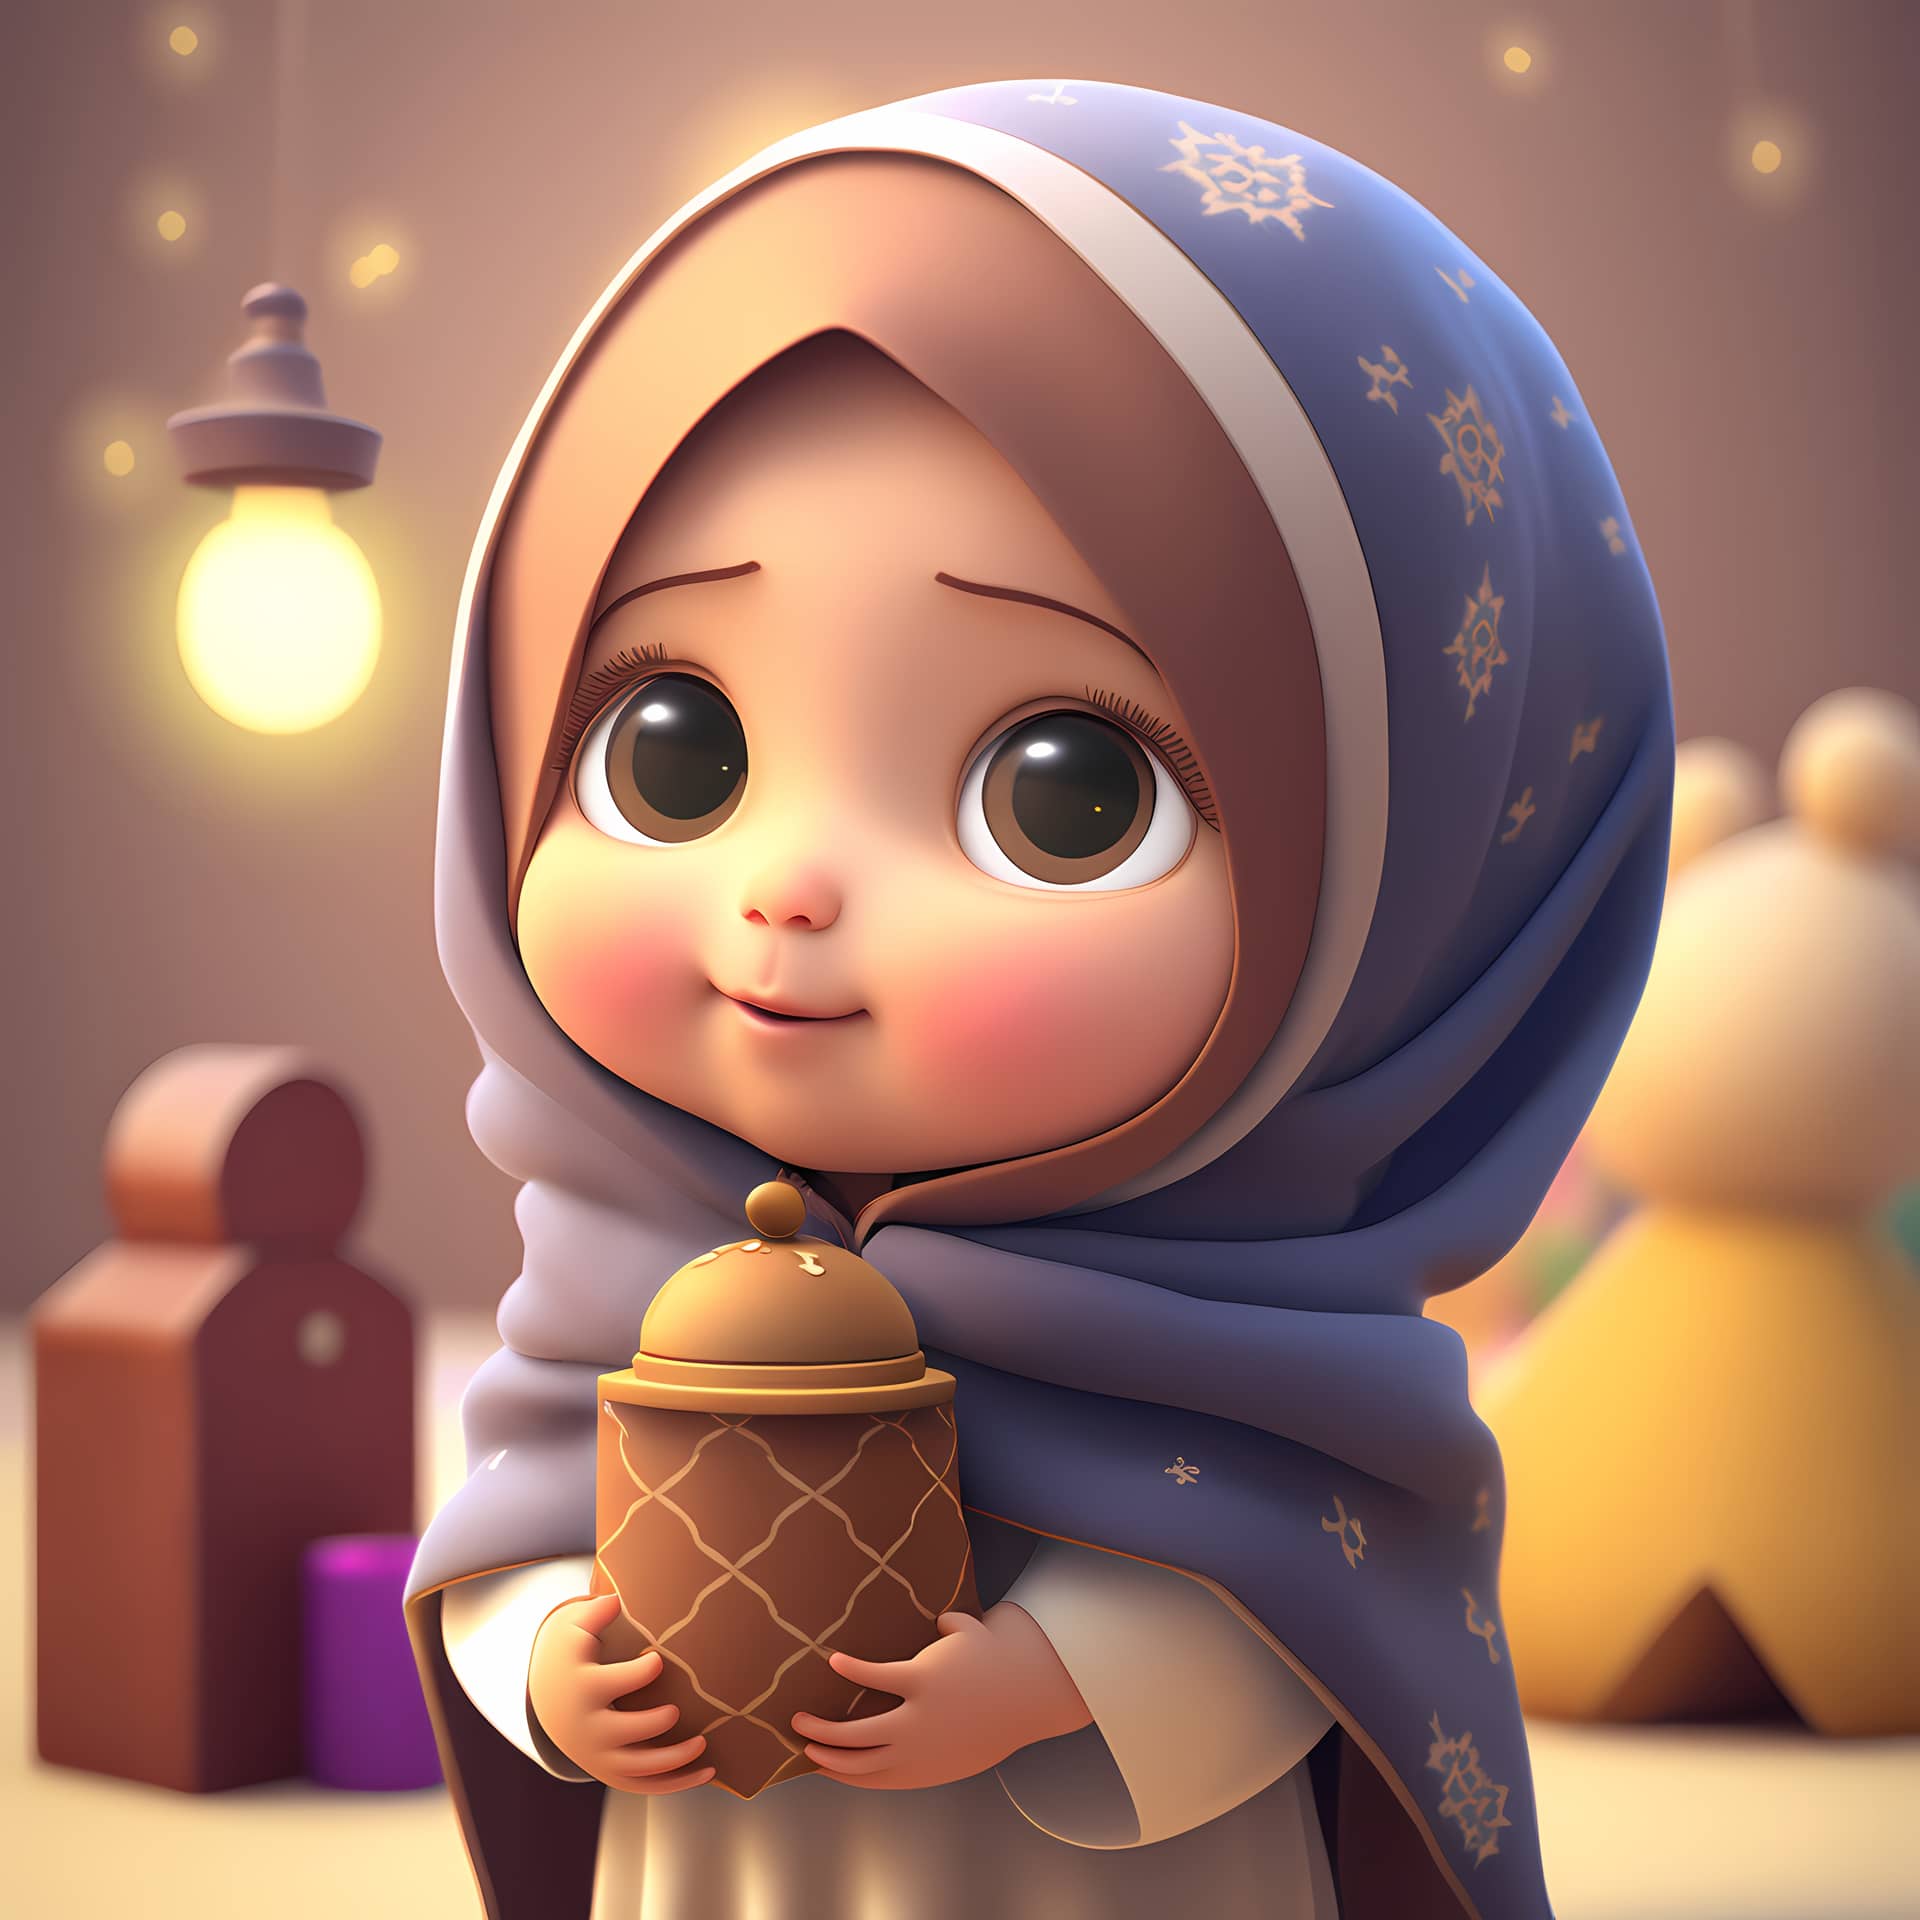 Adorable cute muslim cartoon profile pictures